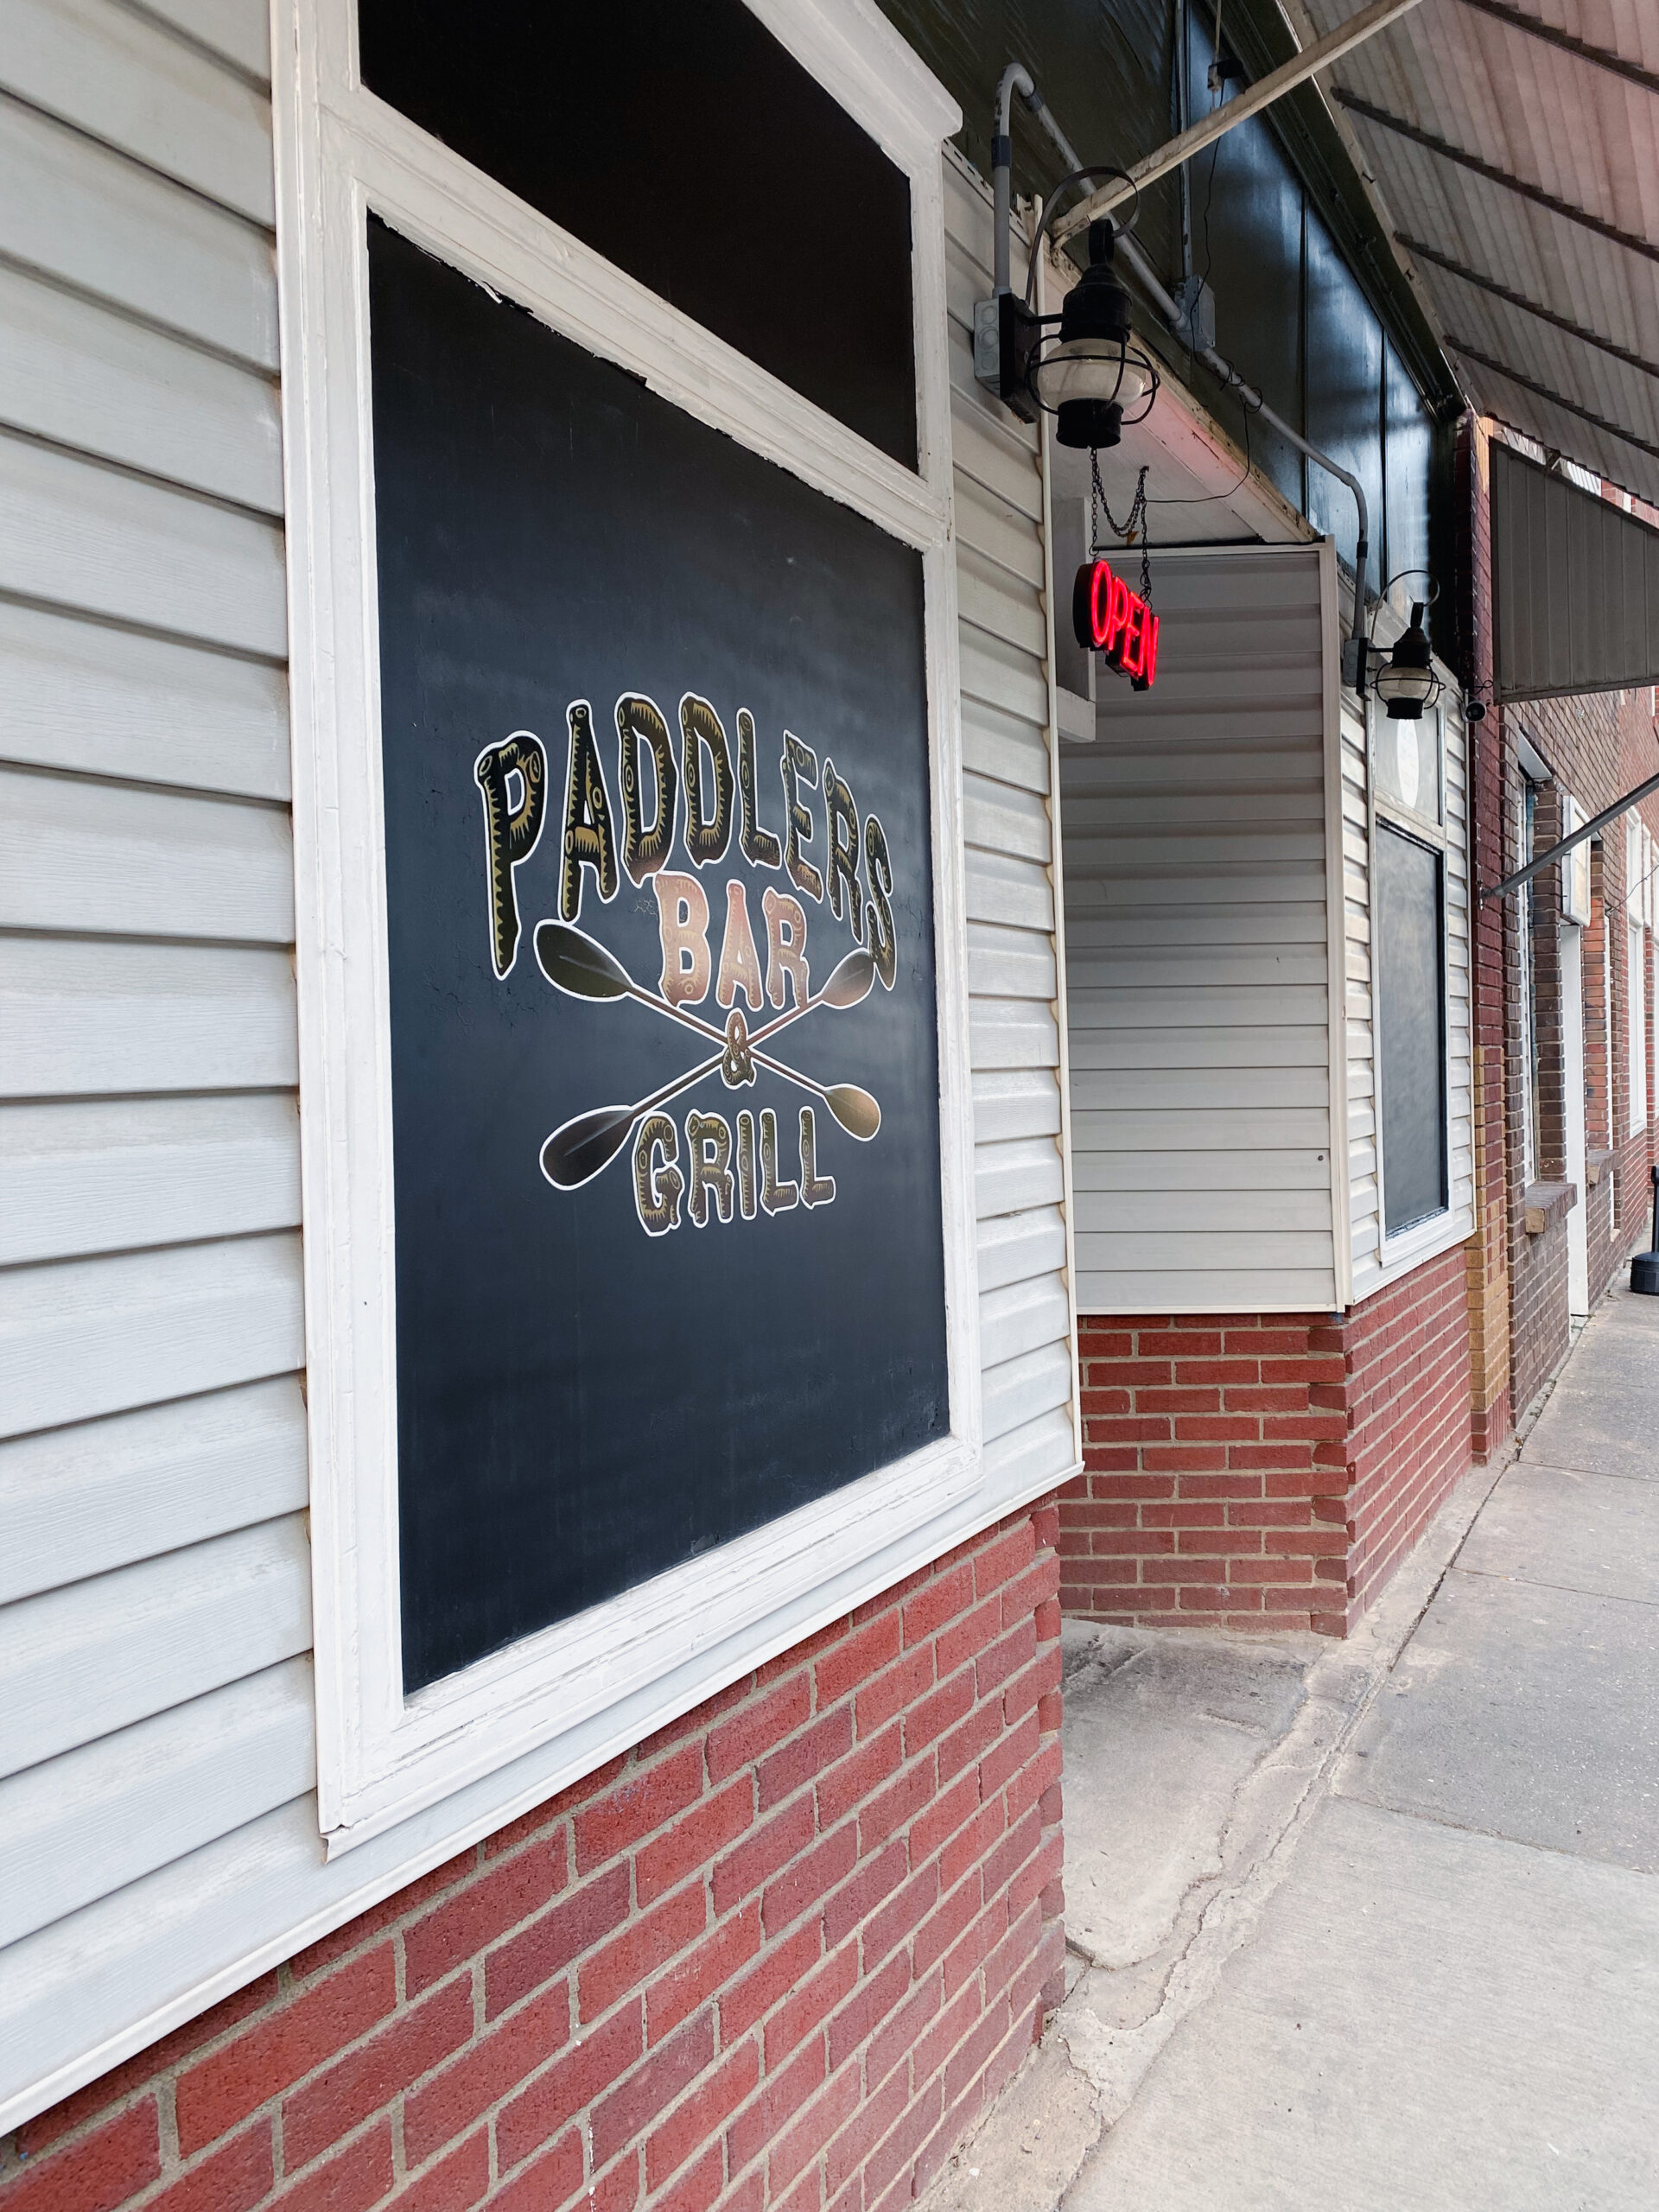 Paddlers Bar & Grill Clendenin WV